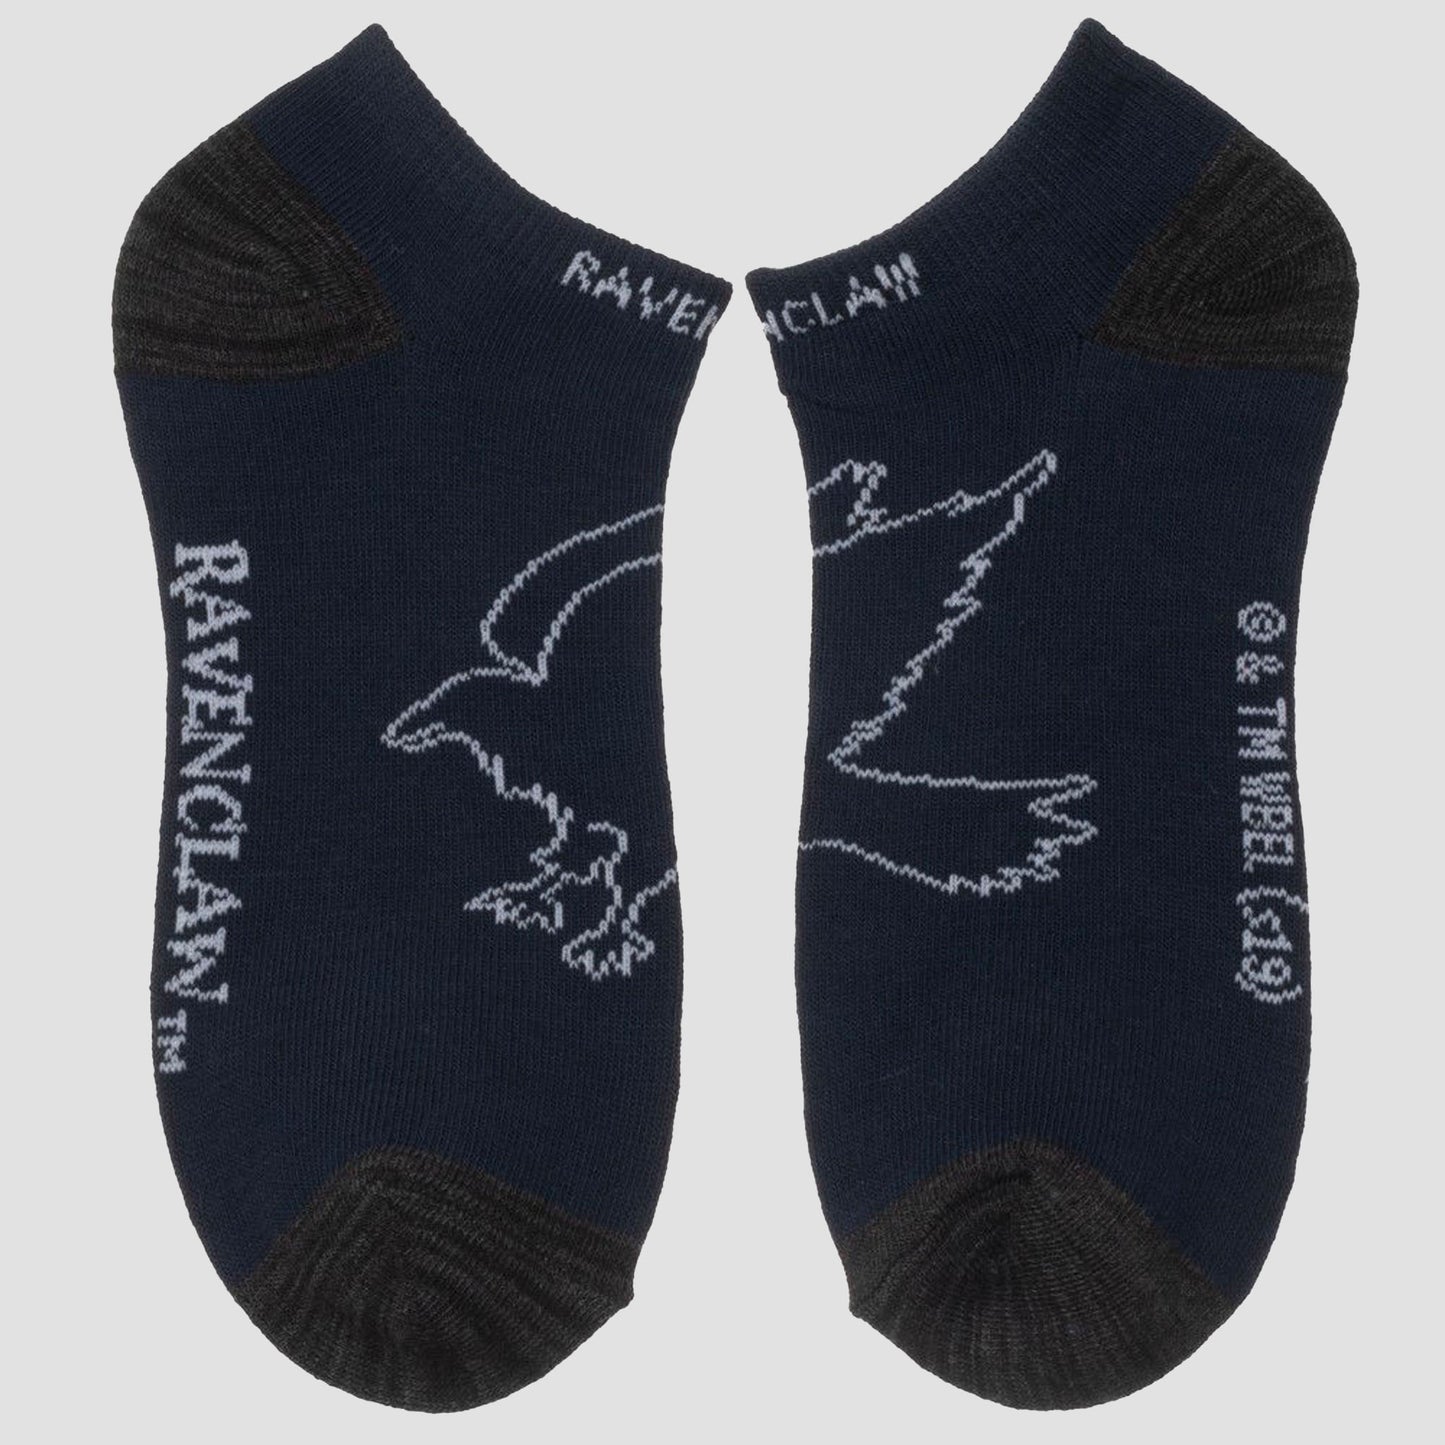 Ravenclaw House (Harry Potter) Ankle Socks 5 Pair Set